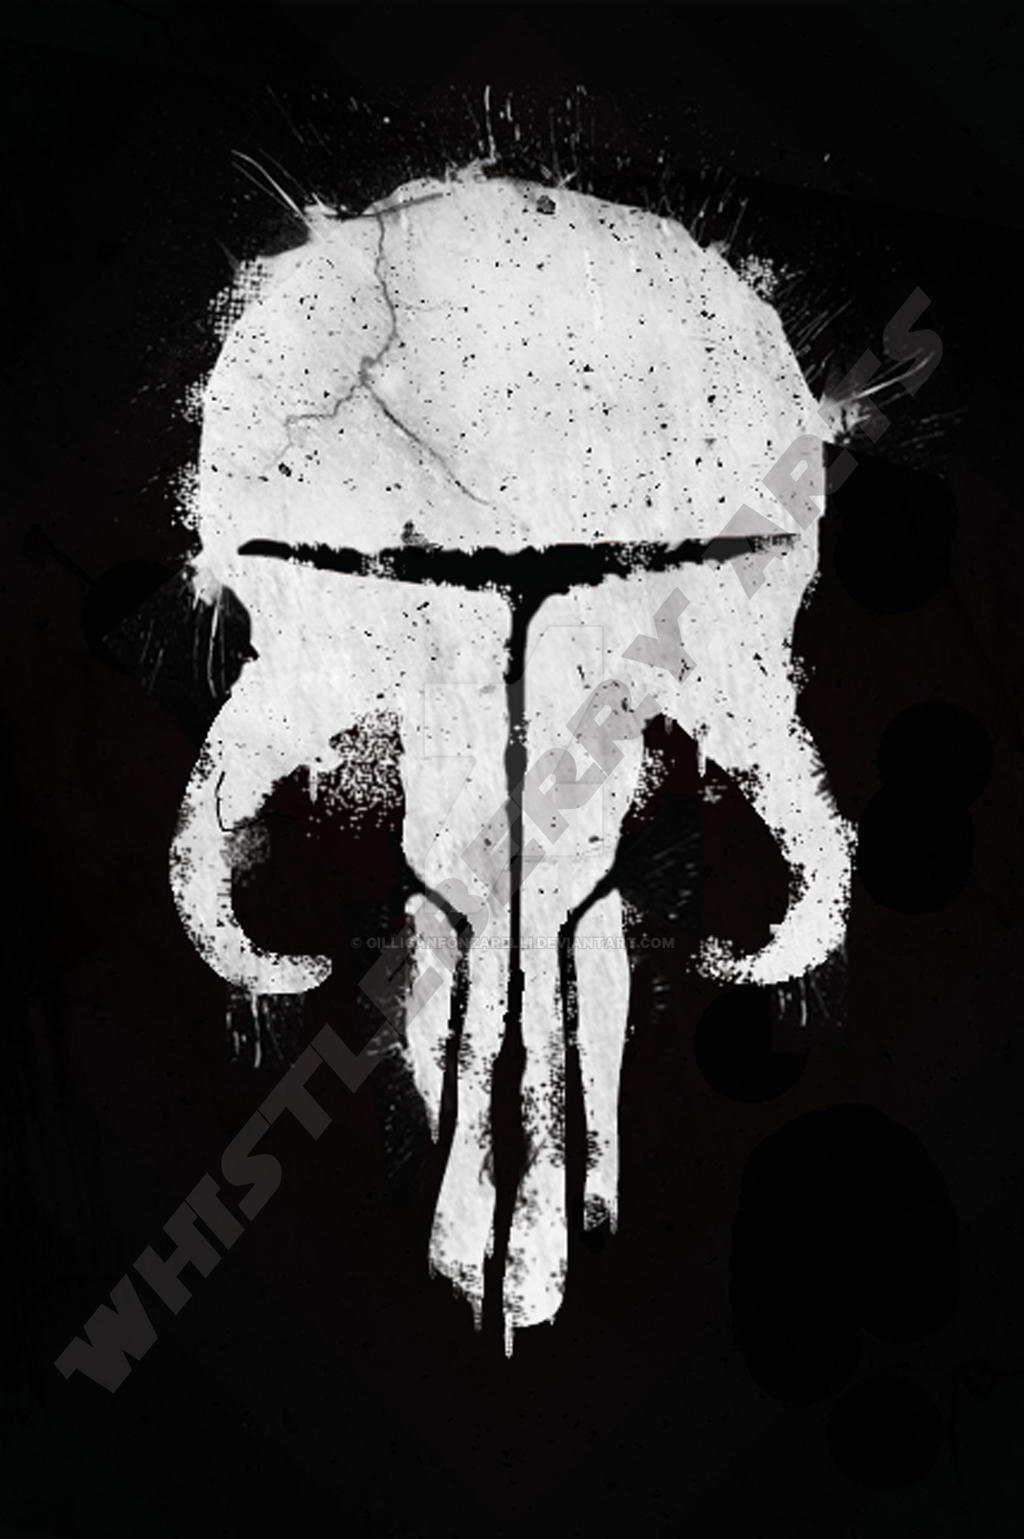 Punisher Wallpaper.Logo by Behindyou107 on DeviantArt